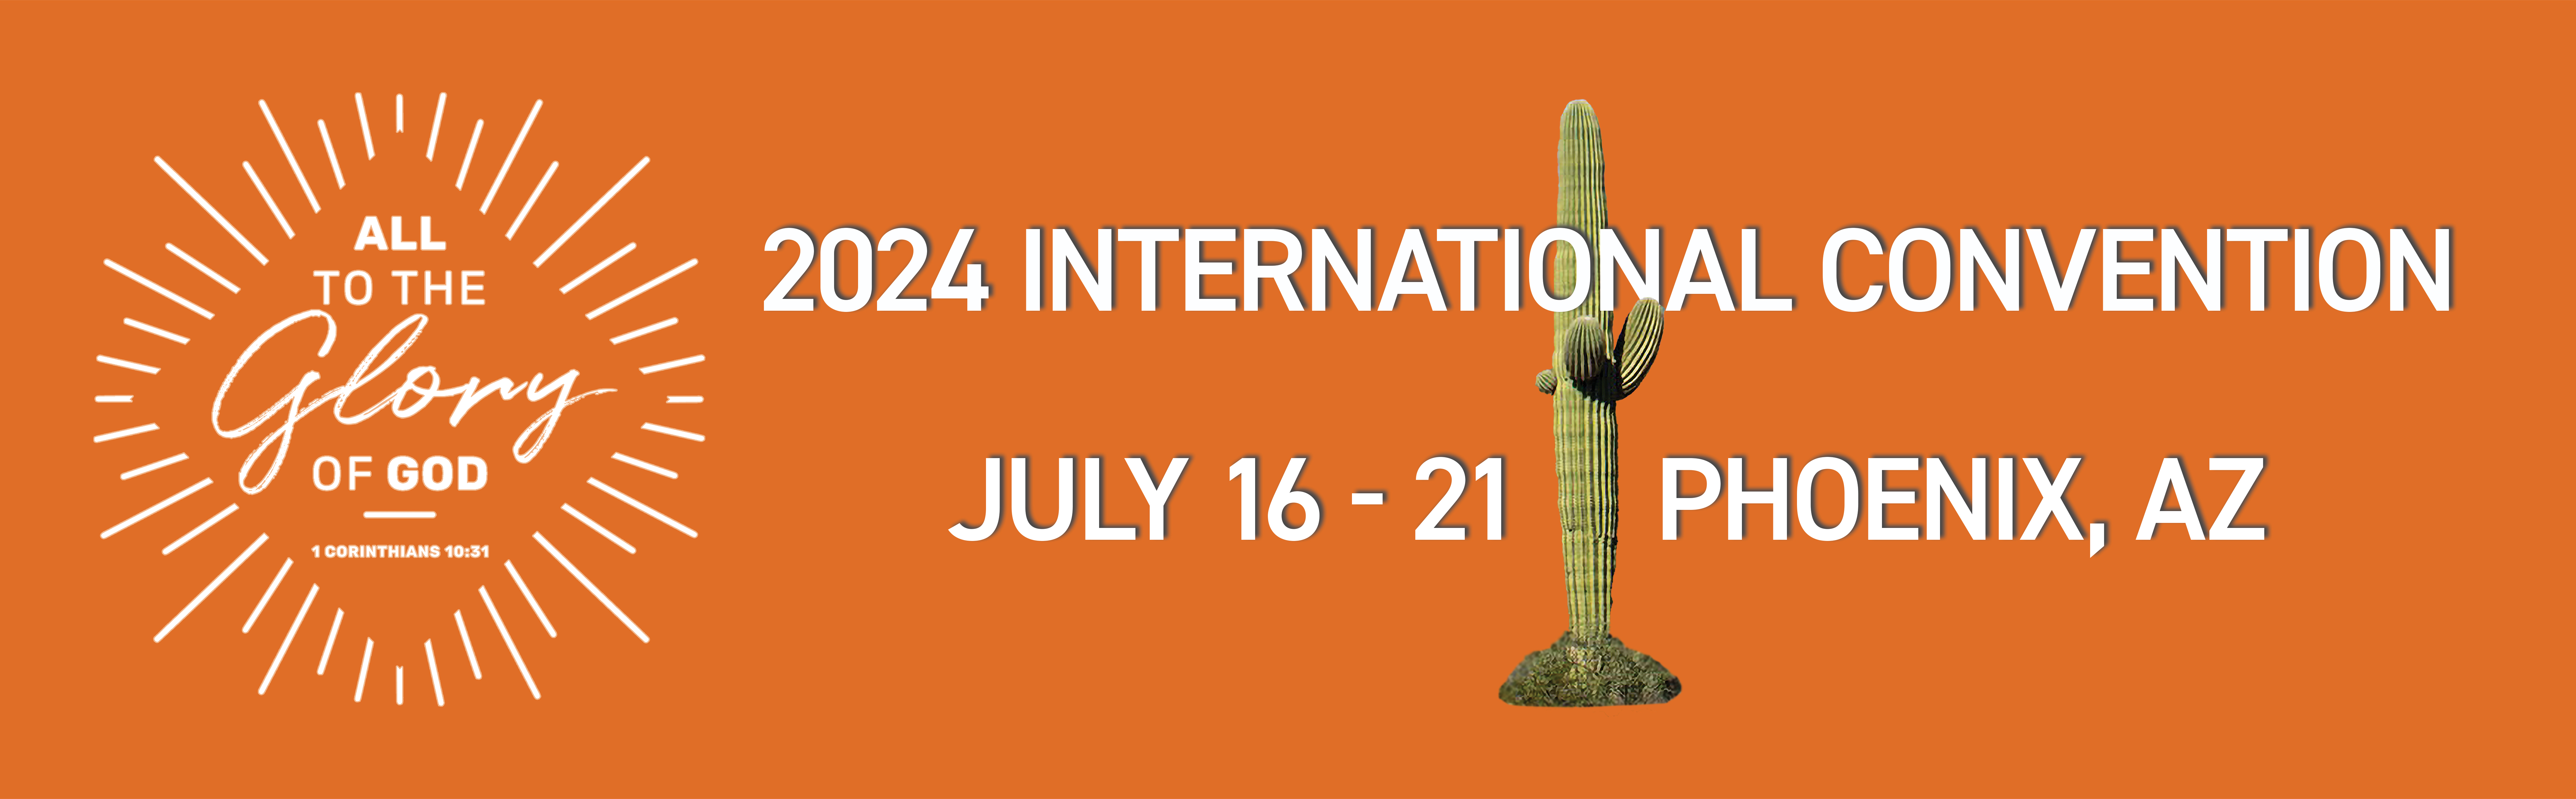 Phoenix International Convention 2024